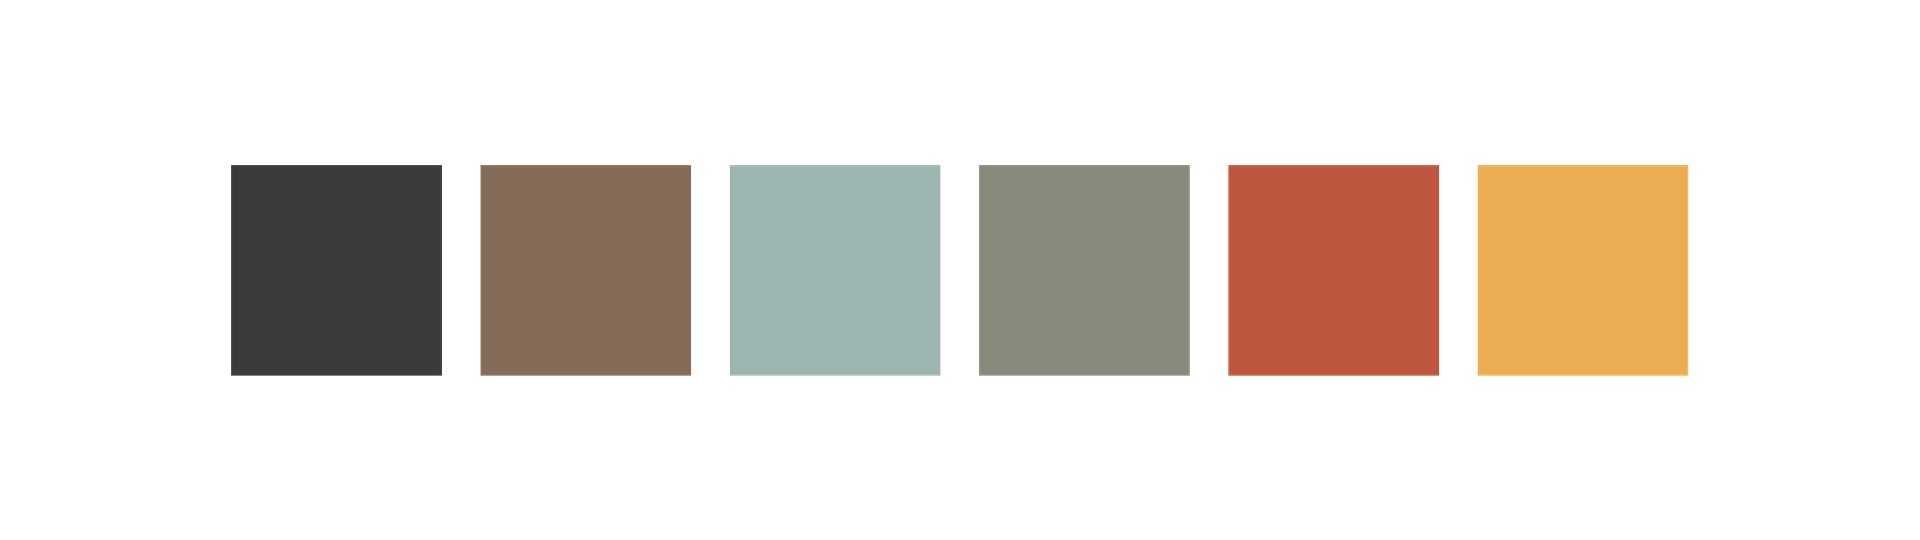 Color Palette: black, brown, light blue, green, orange, yellow